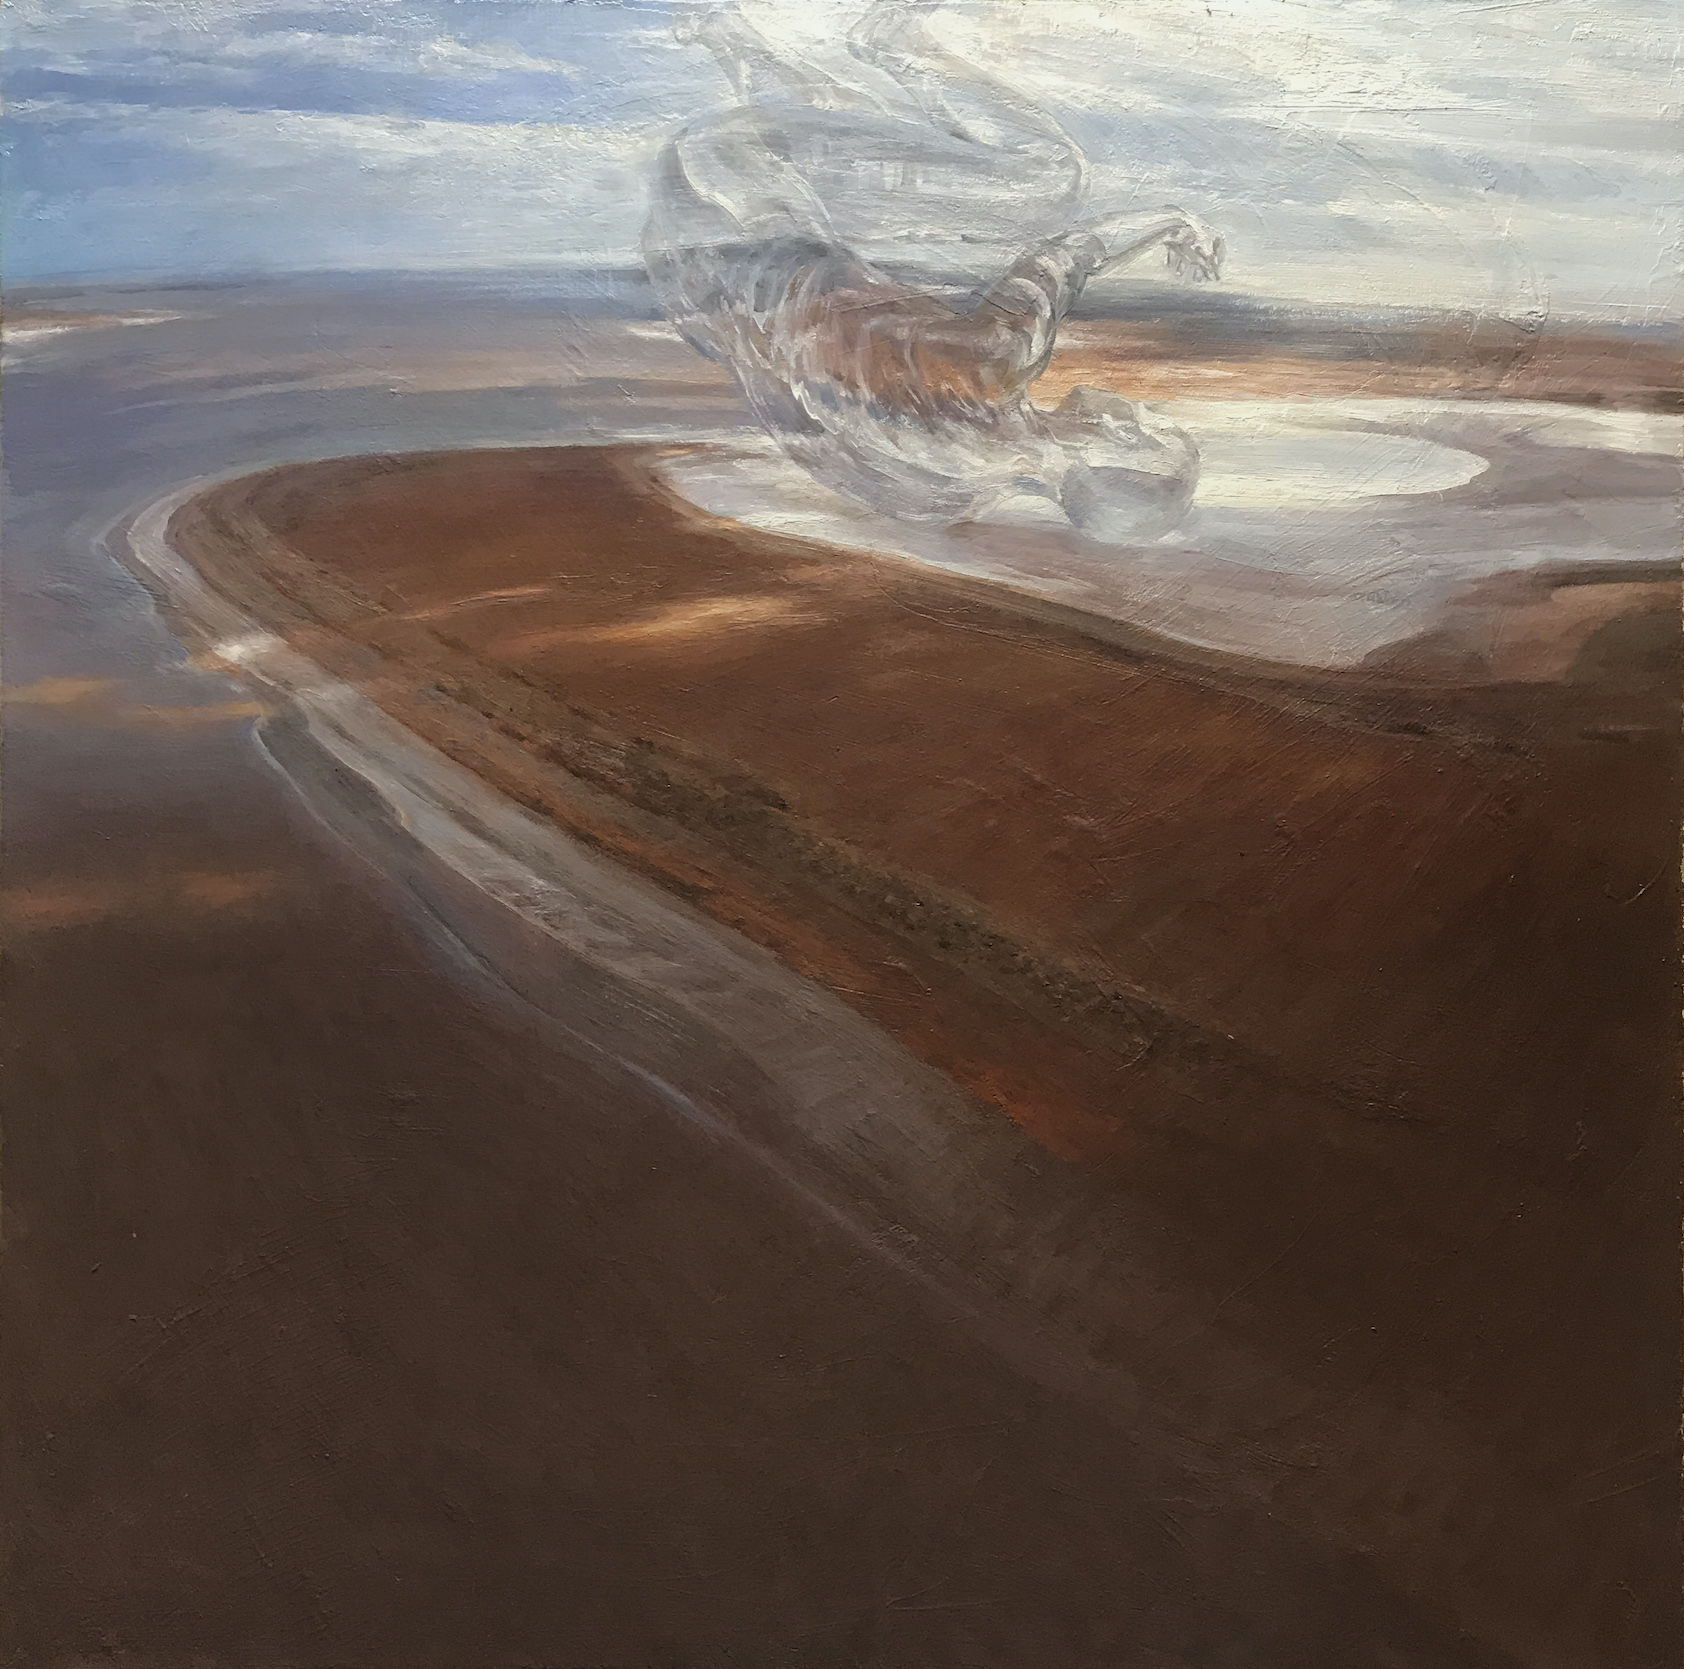 Deluge, Lake Eyre by Scott J Breton | Lethbridge Landscape Prize 2021 Finalists | Lethbridge Gallery